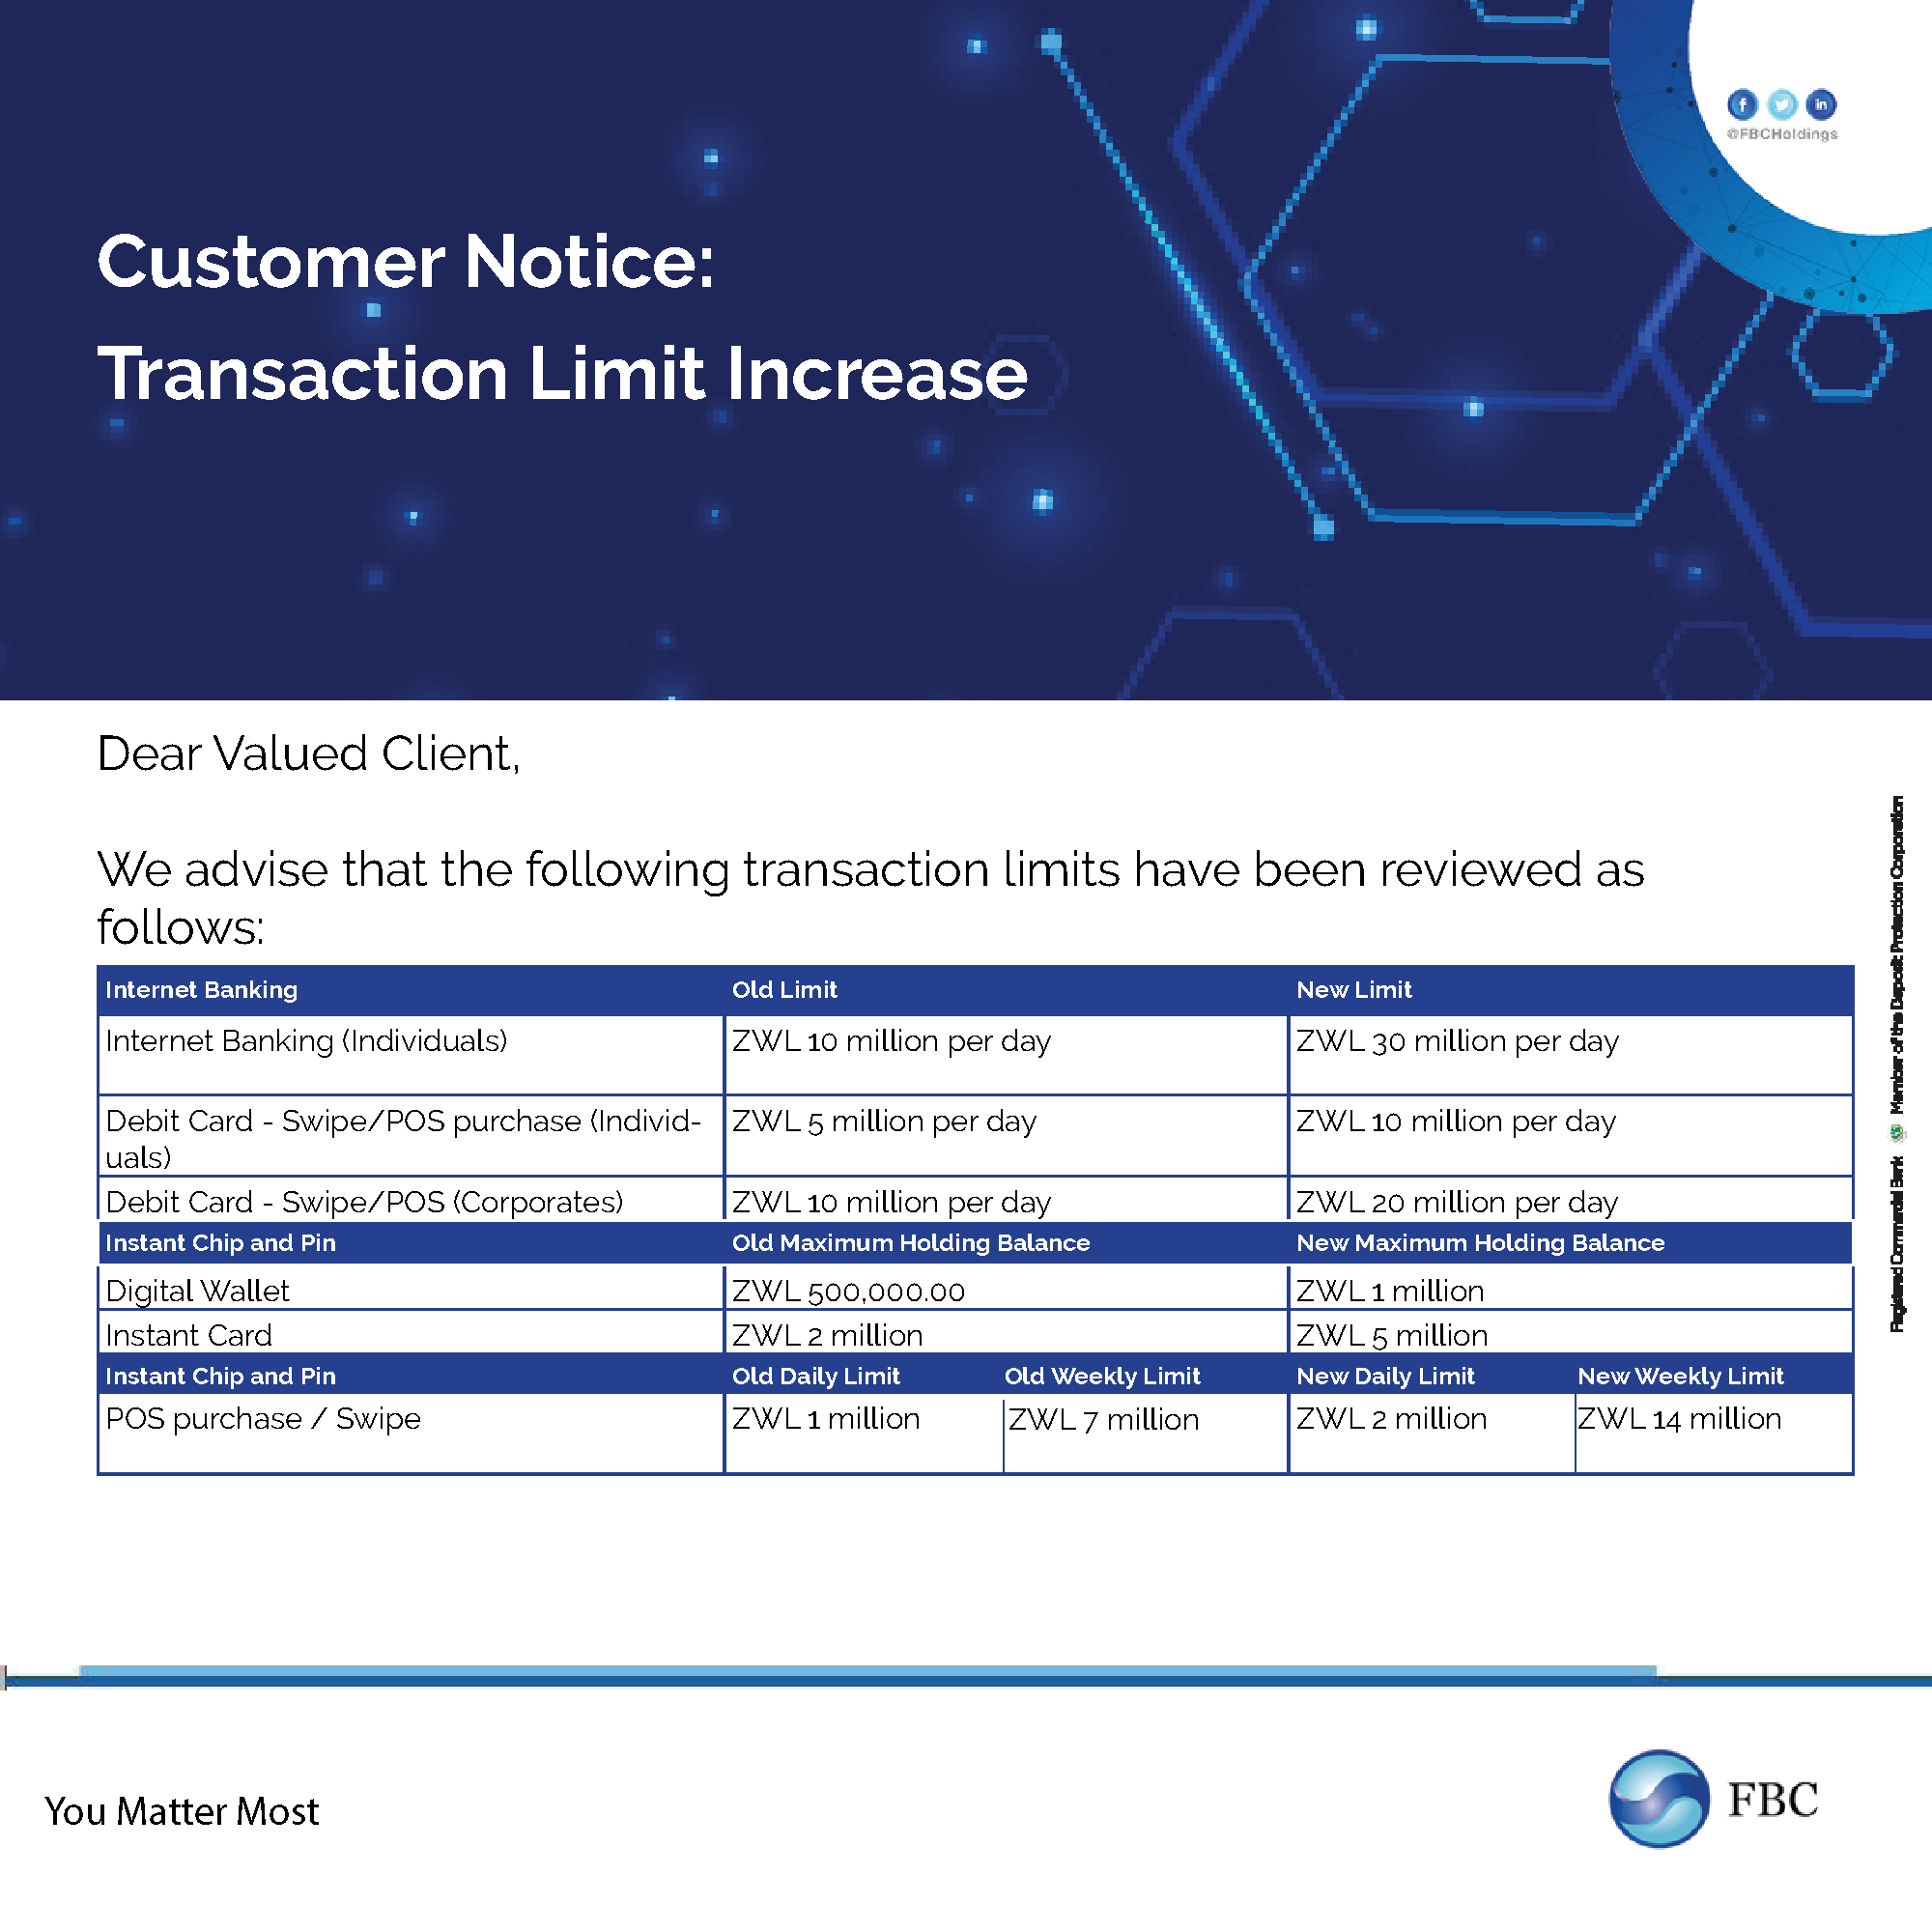 Customer Notice: Transaction Limits Increase